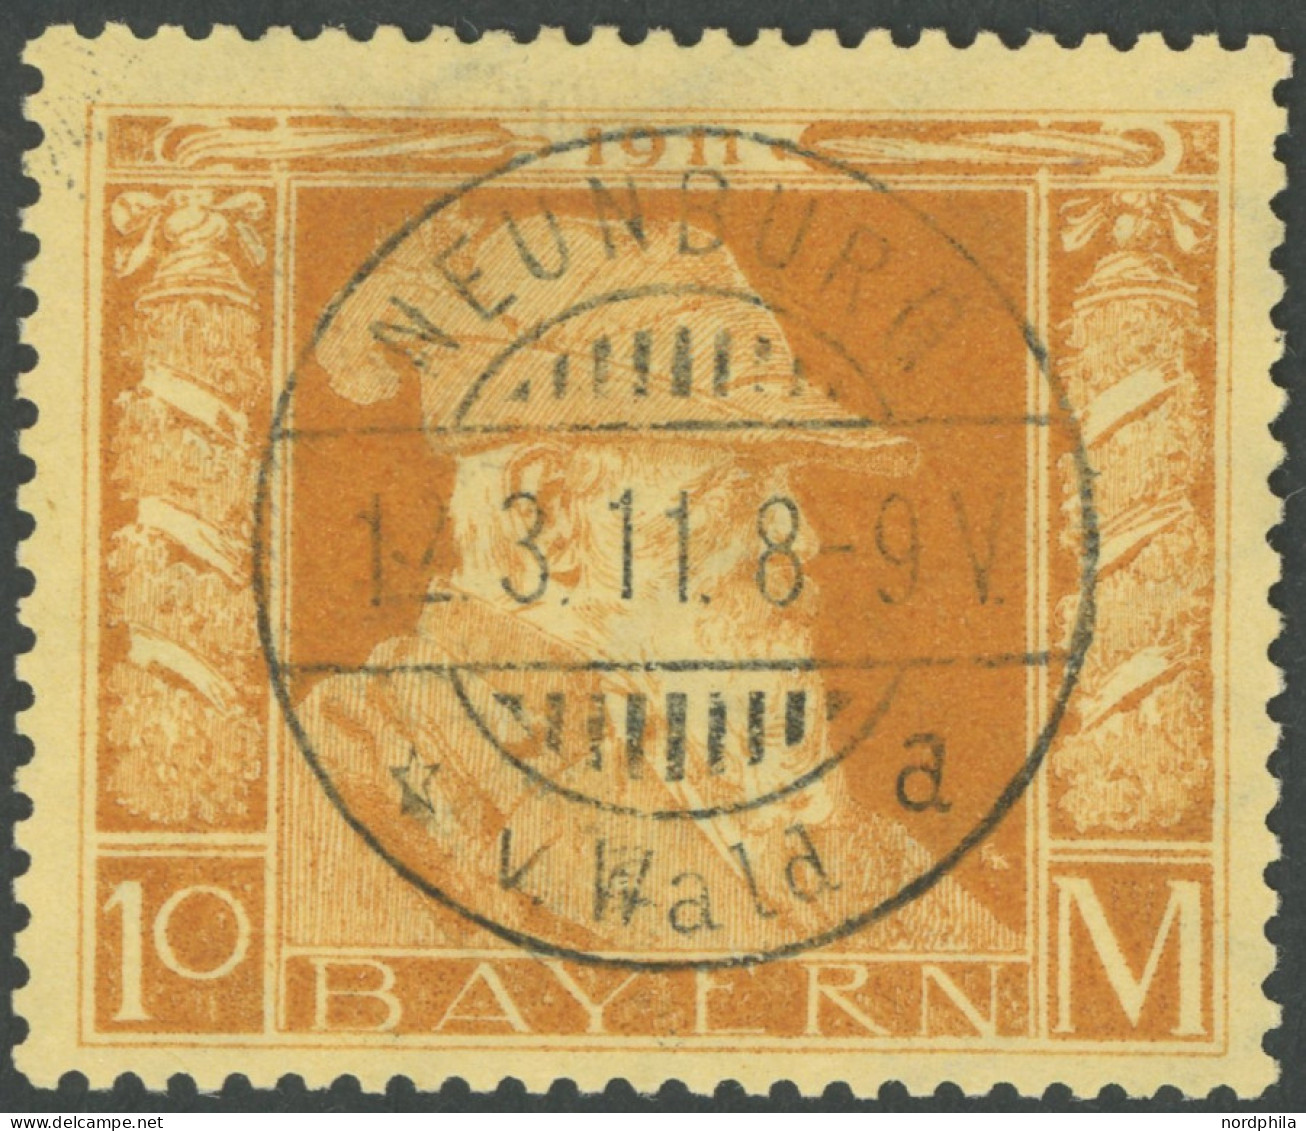 BAYERN 90II O, 1911, 10 M. Luitpold, Type II, Idealer Stempel NEUENBURG V. WALD, Pracht, Mi. 400.- - Used